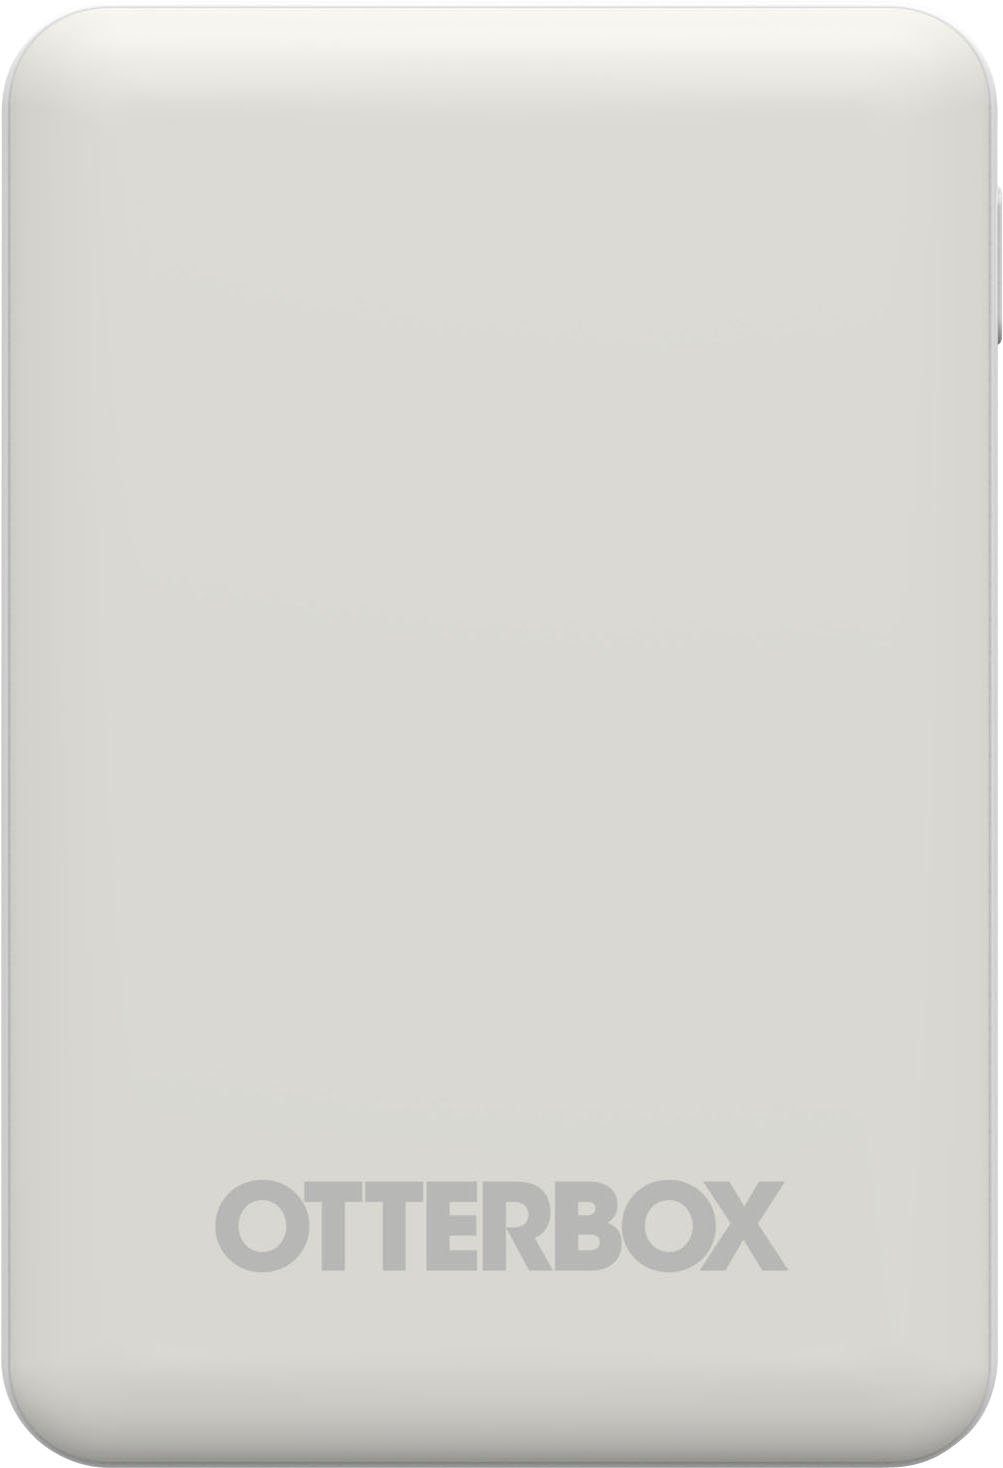 Otterbox Power Bank 5000 mAh externer Akku mit USB-A und Micro-USB Powerbank 5000 mAh, Status LED, schlankes, robustes Design, inkl. 3 in 1 Ladekabel